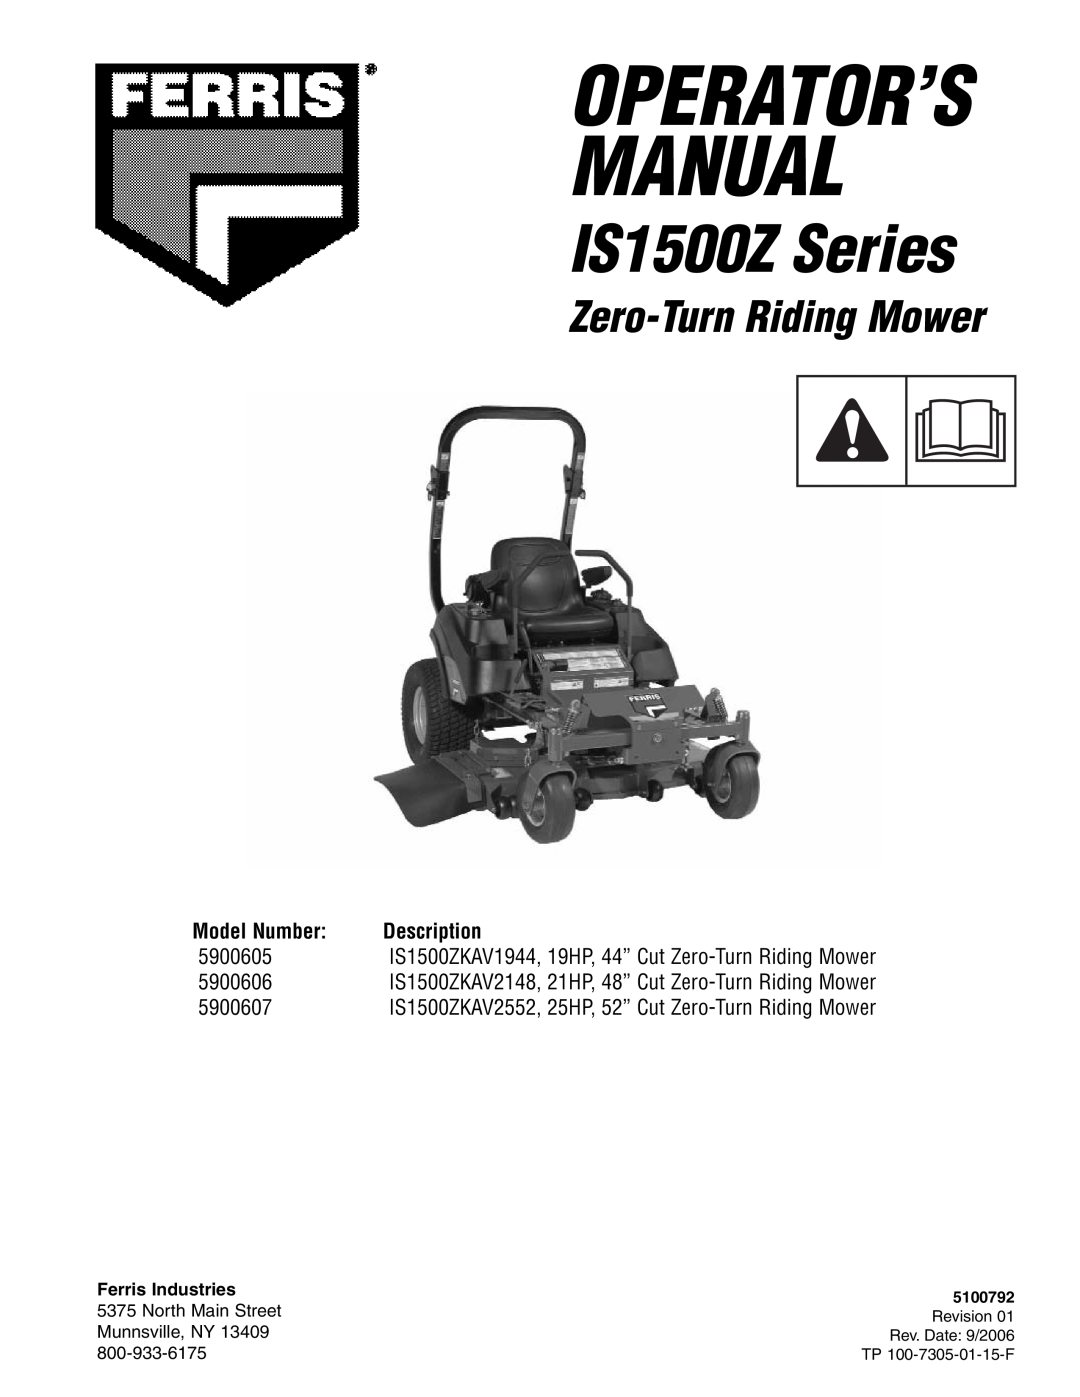 Ferris Industries 5900607 manual IS1500Z Series, Zero-Turn Riding Mower, Manual, Operator’S, 5900605, 5900606, 5100792 